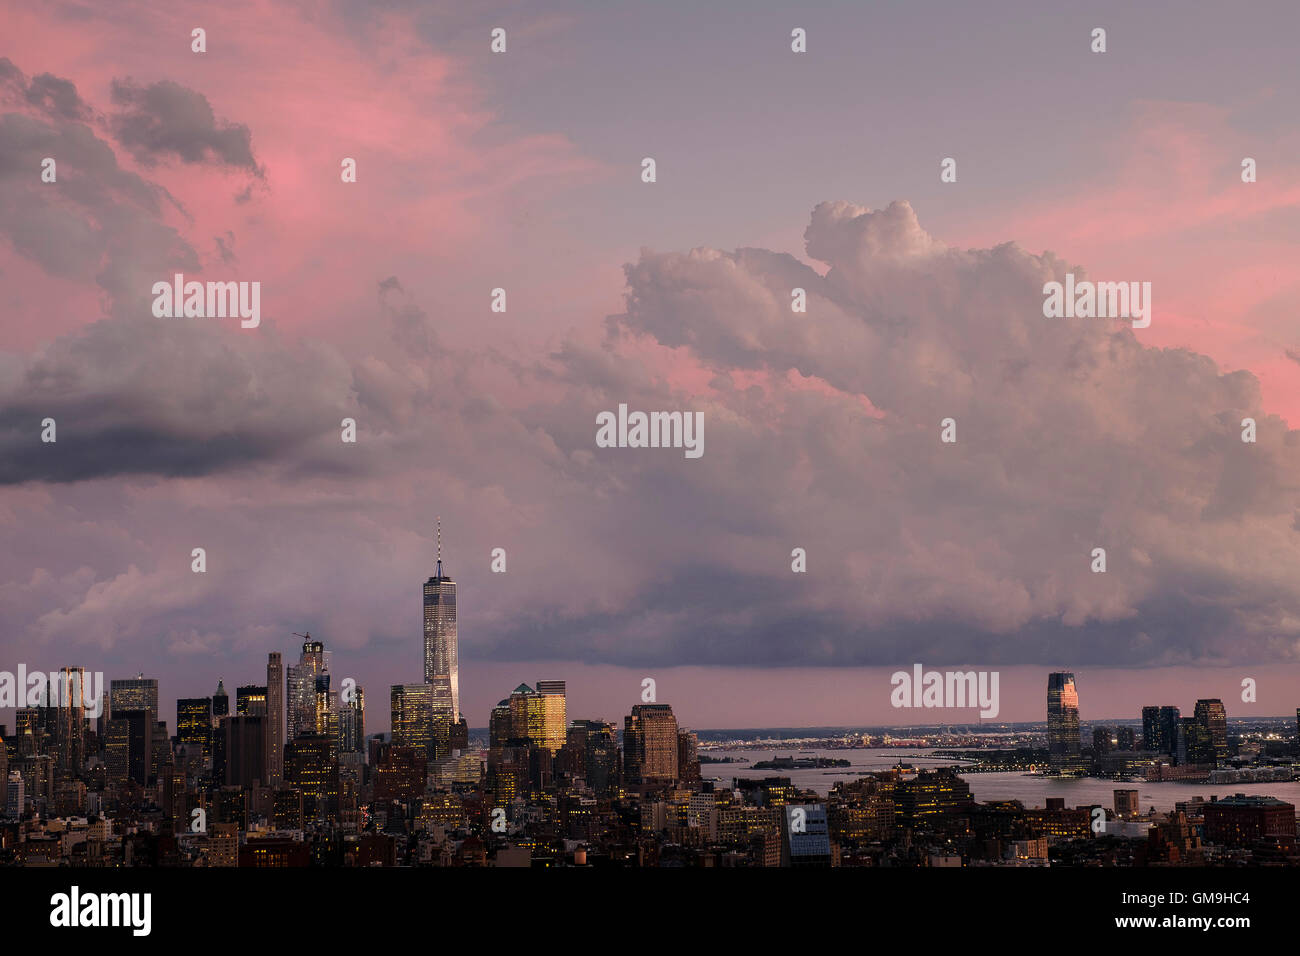 City skyline under dramatic pink sky Stock Photo